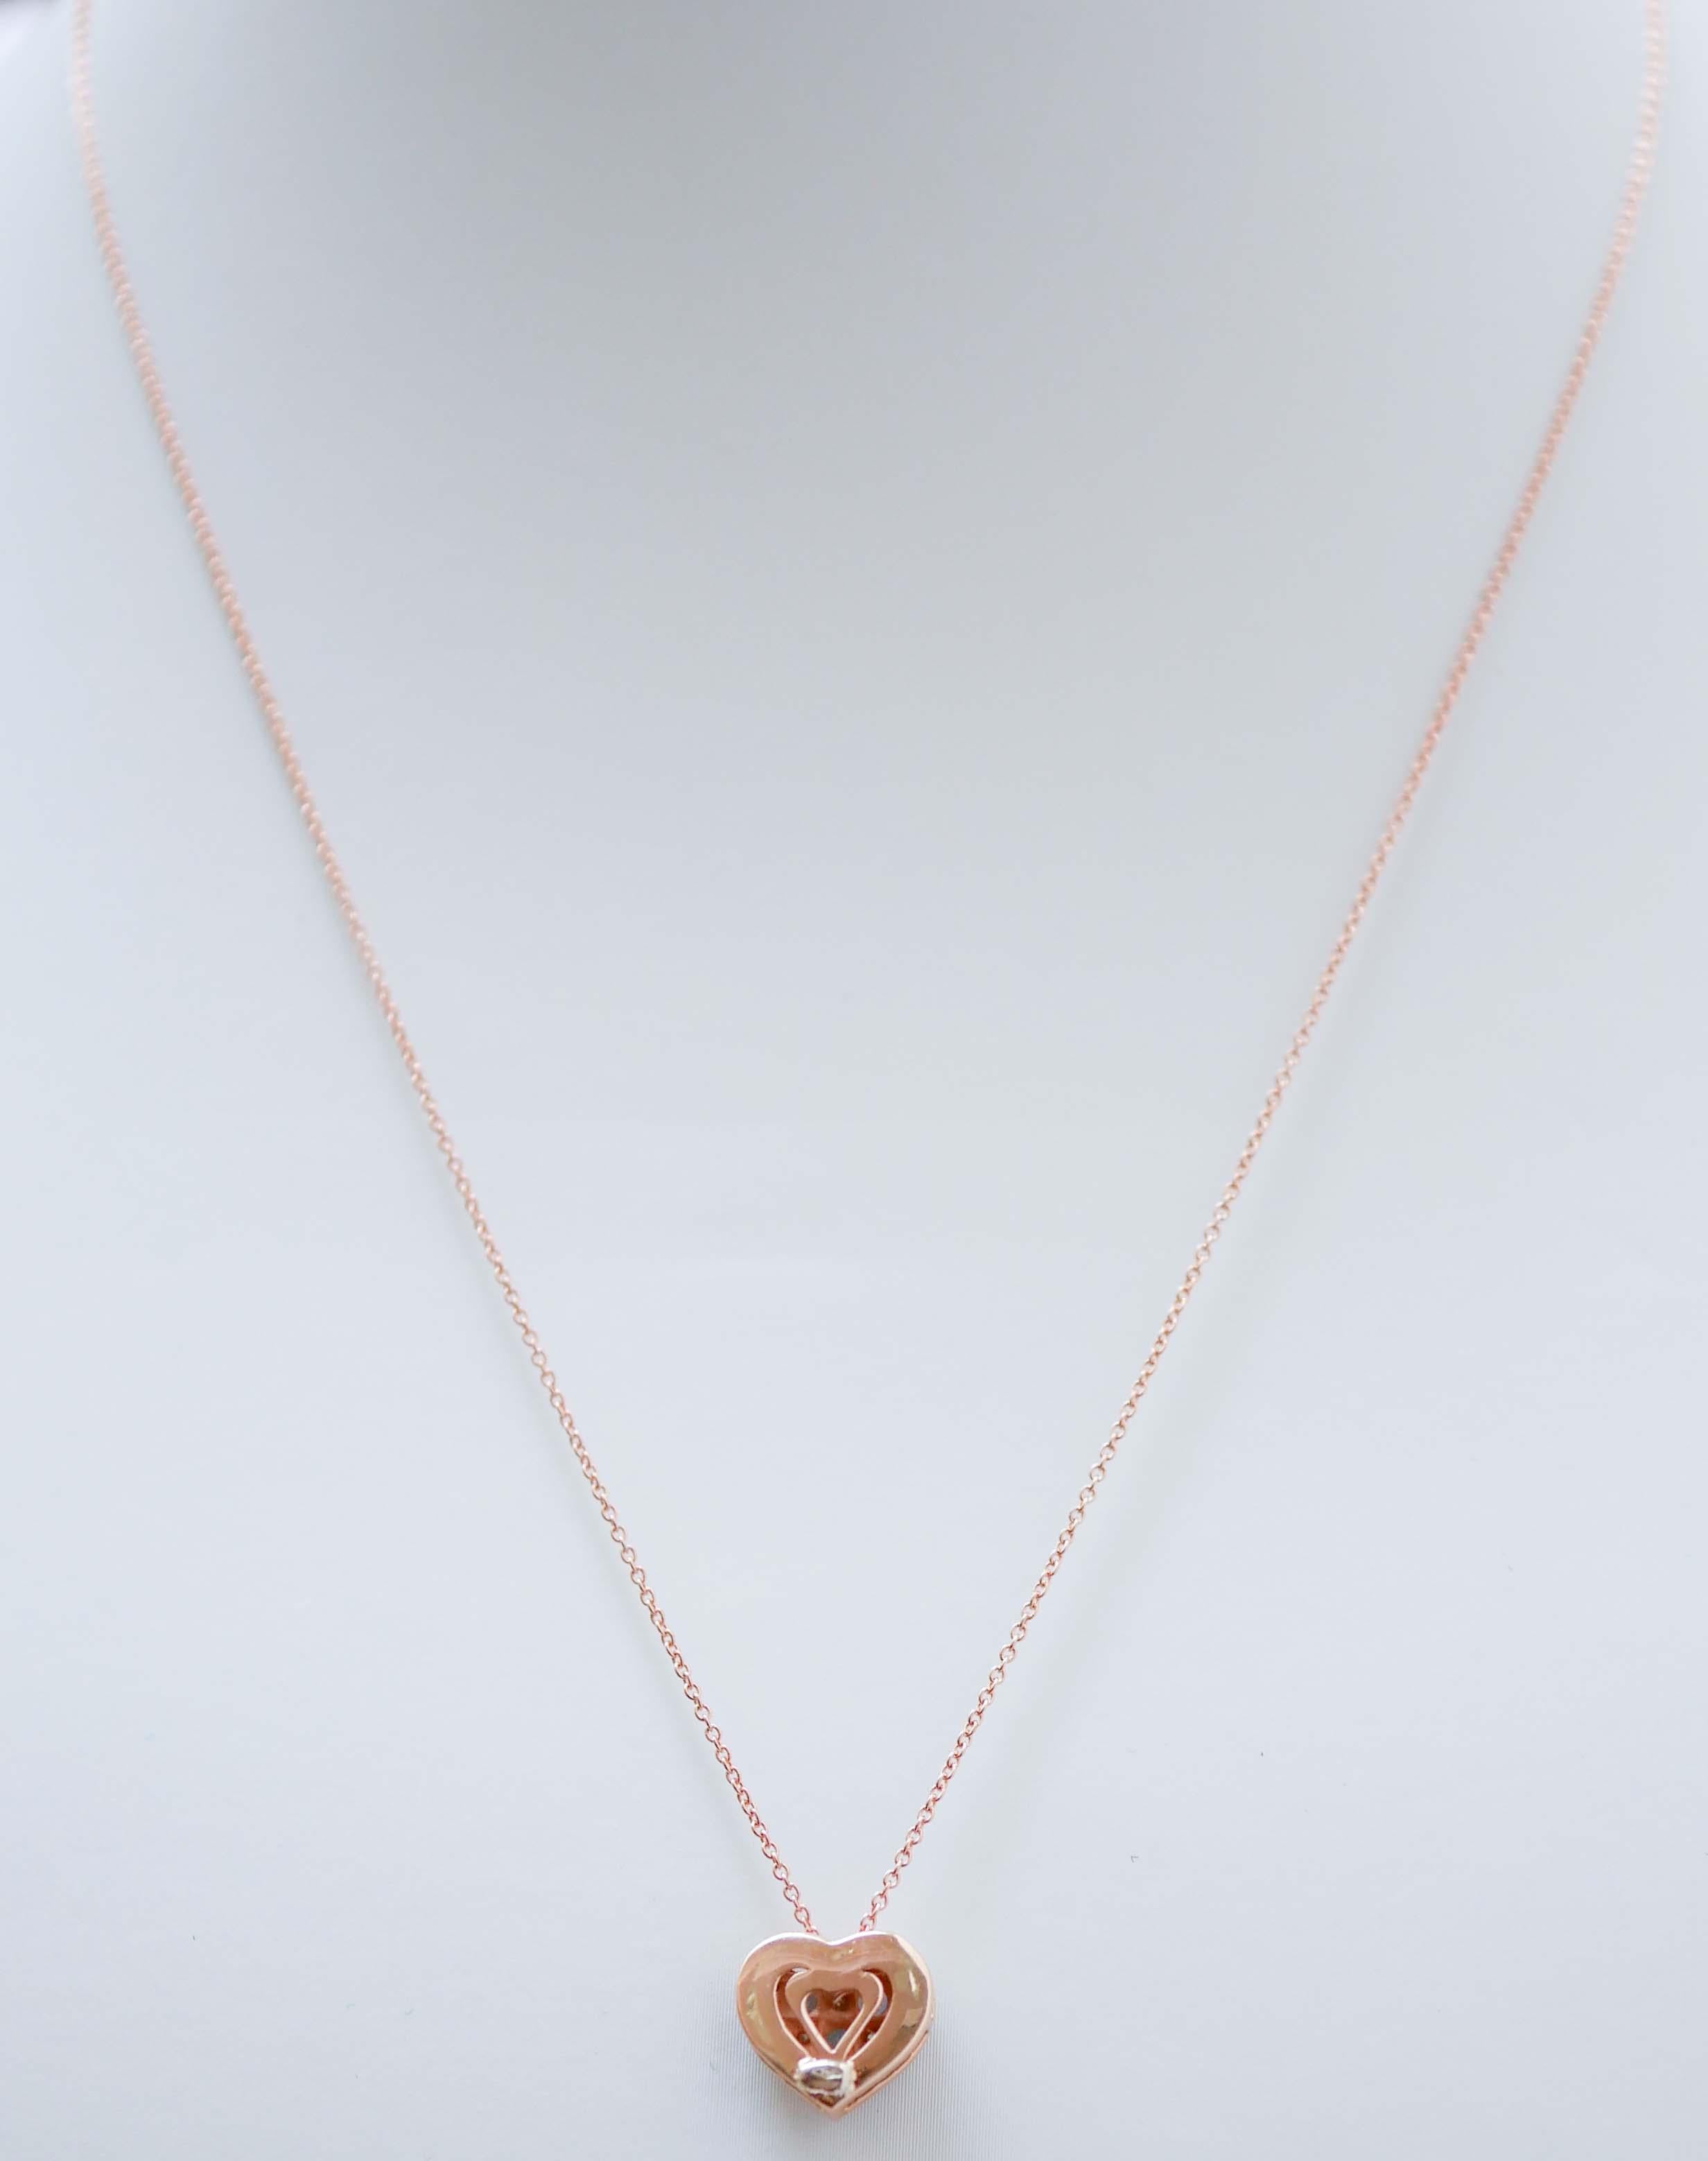 Mixed Cut Aquamarine, Diamonds, 18 Karat Rose Gold Heart Pendant Necklace. For Sale